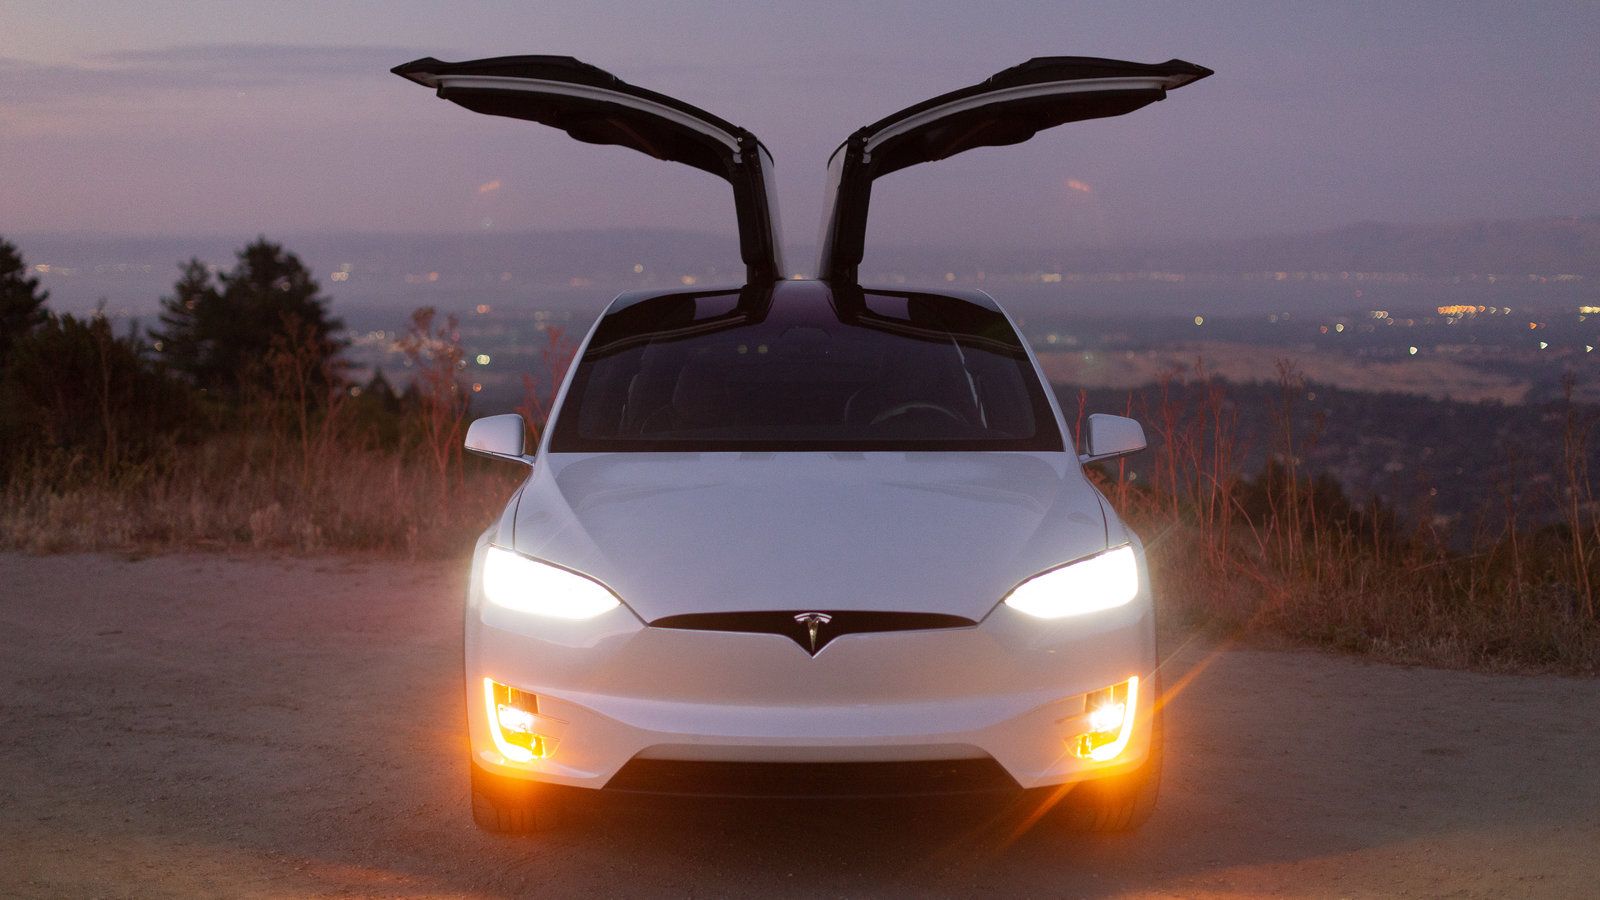 An image showing a white Tesla model x